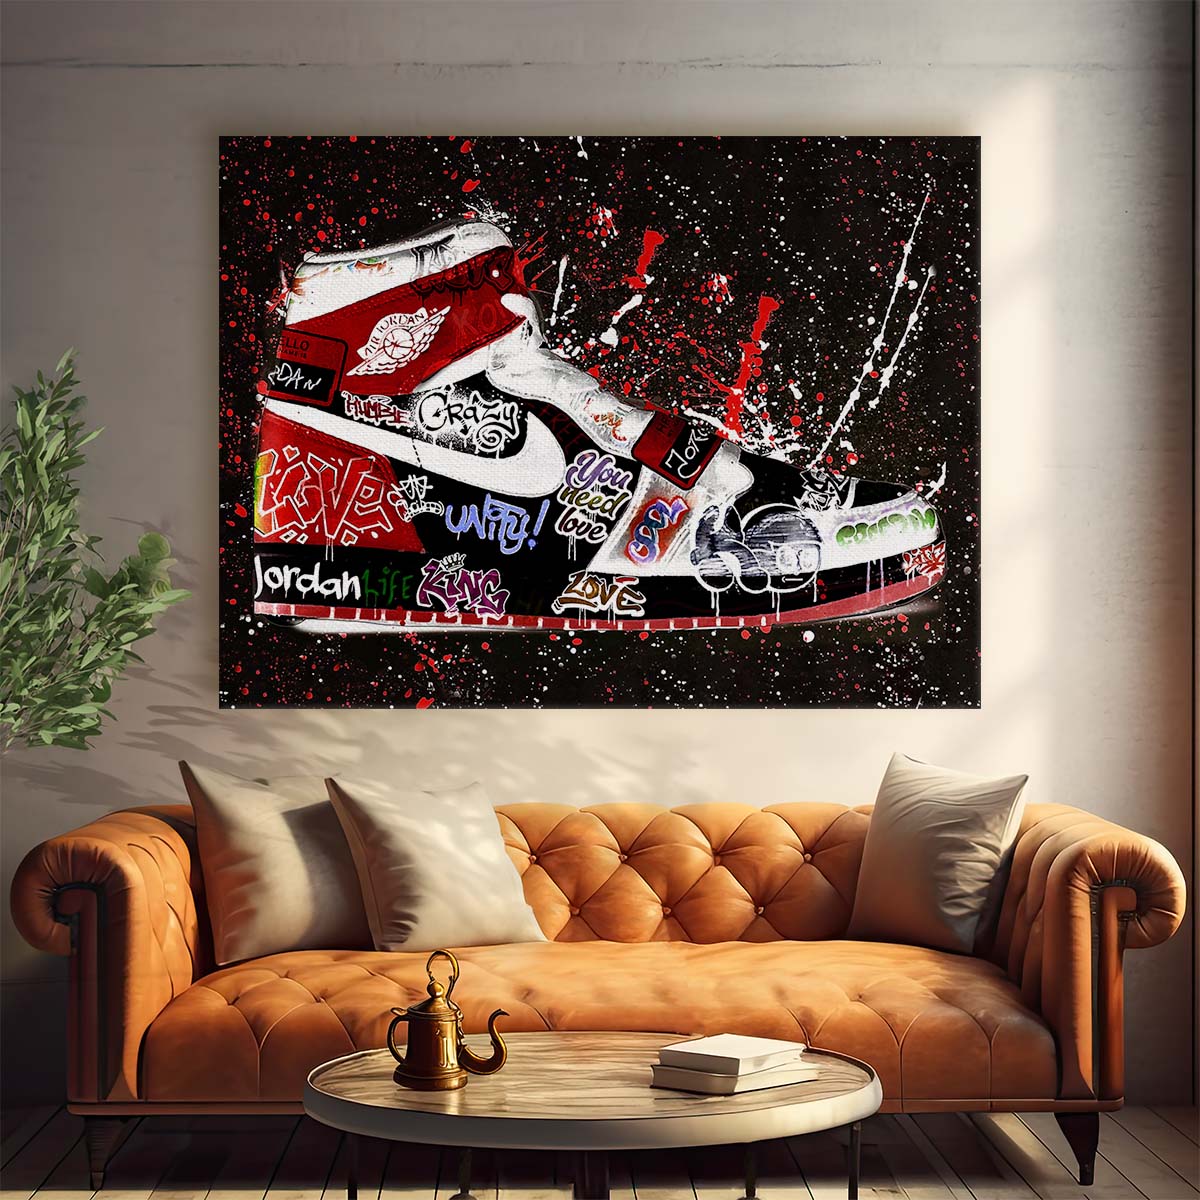 Retro Jordan OG Nike Shoes Graffiti Wall Art by Luxuriance Designs. Made in USA.